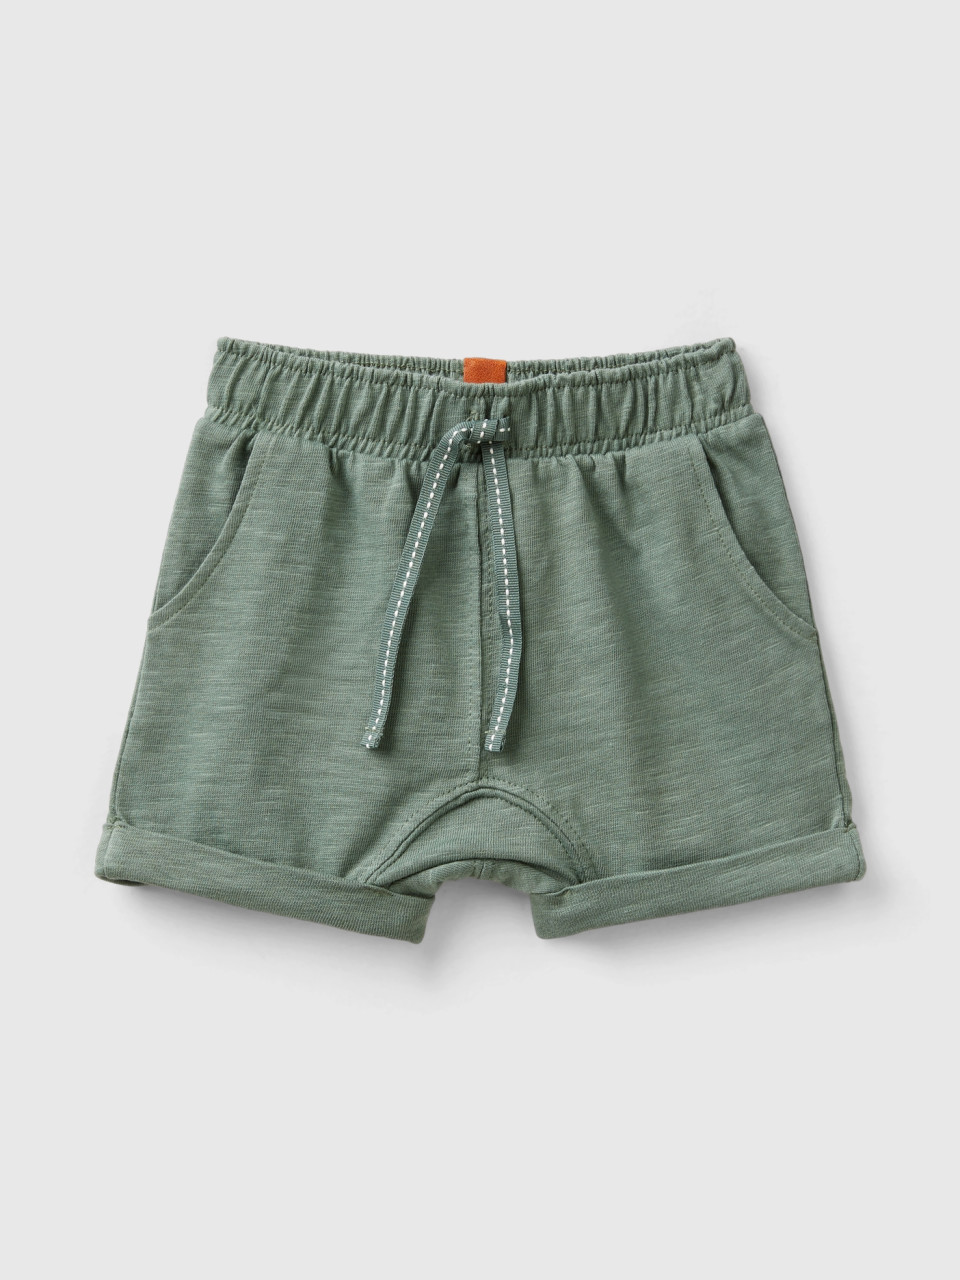 Benetton, Lightweight Cotton Shorts, Military Green, Kids